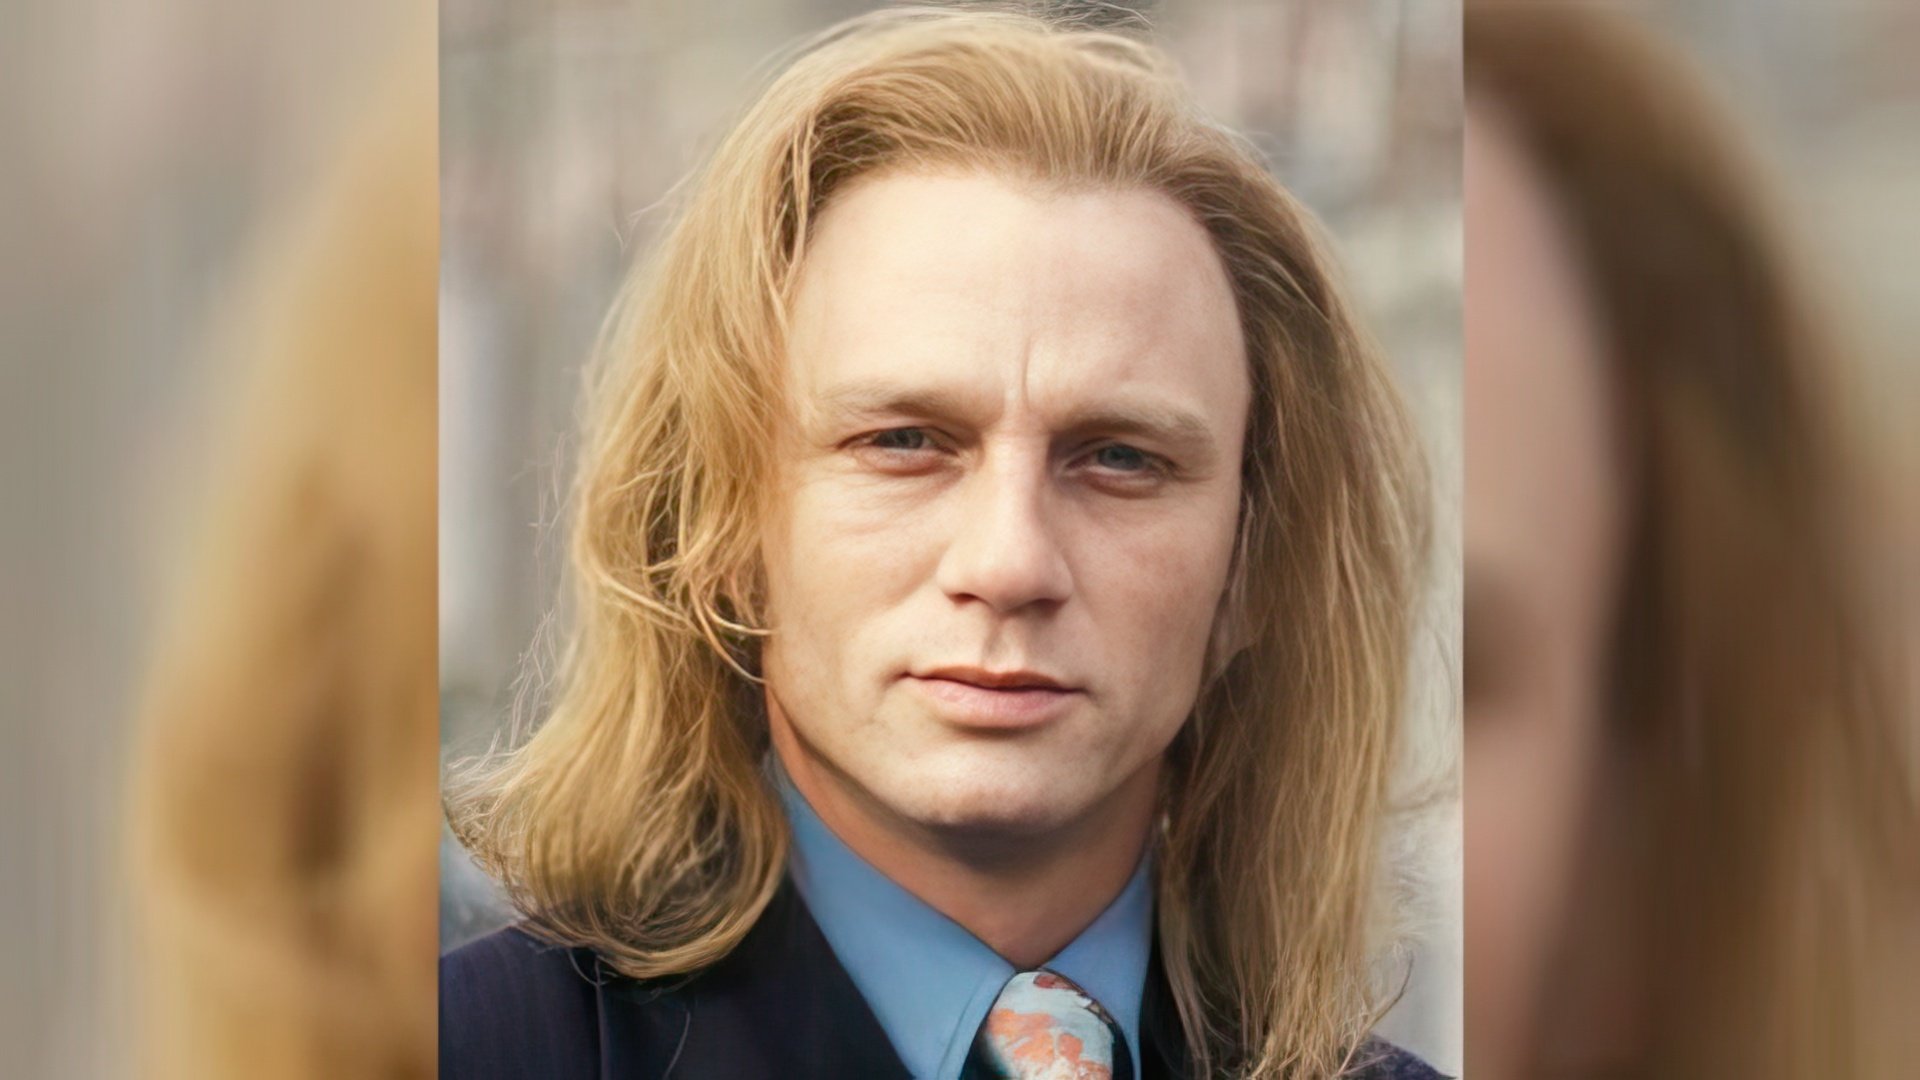 In his youth, Daniel Craig had long hair